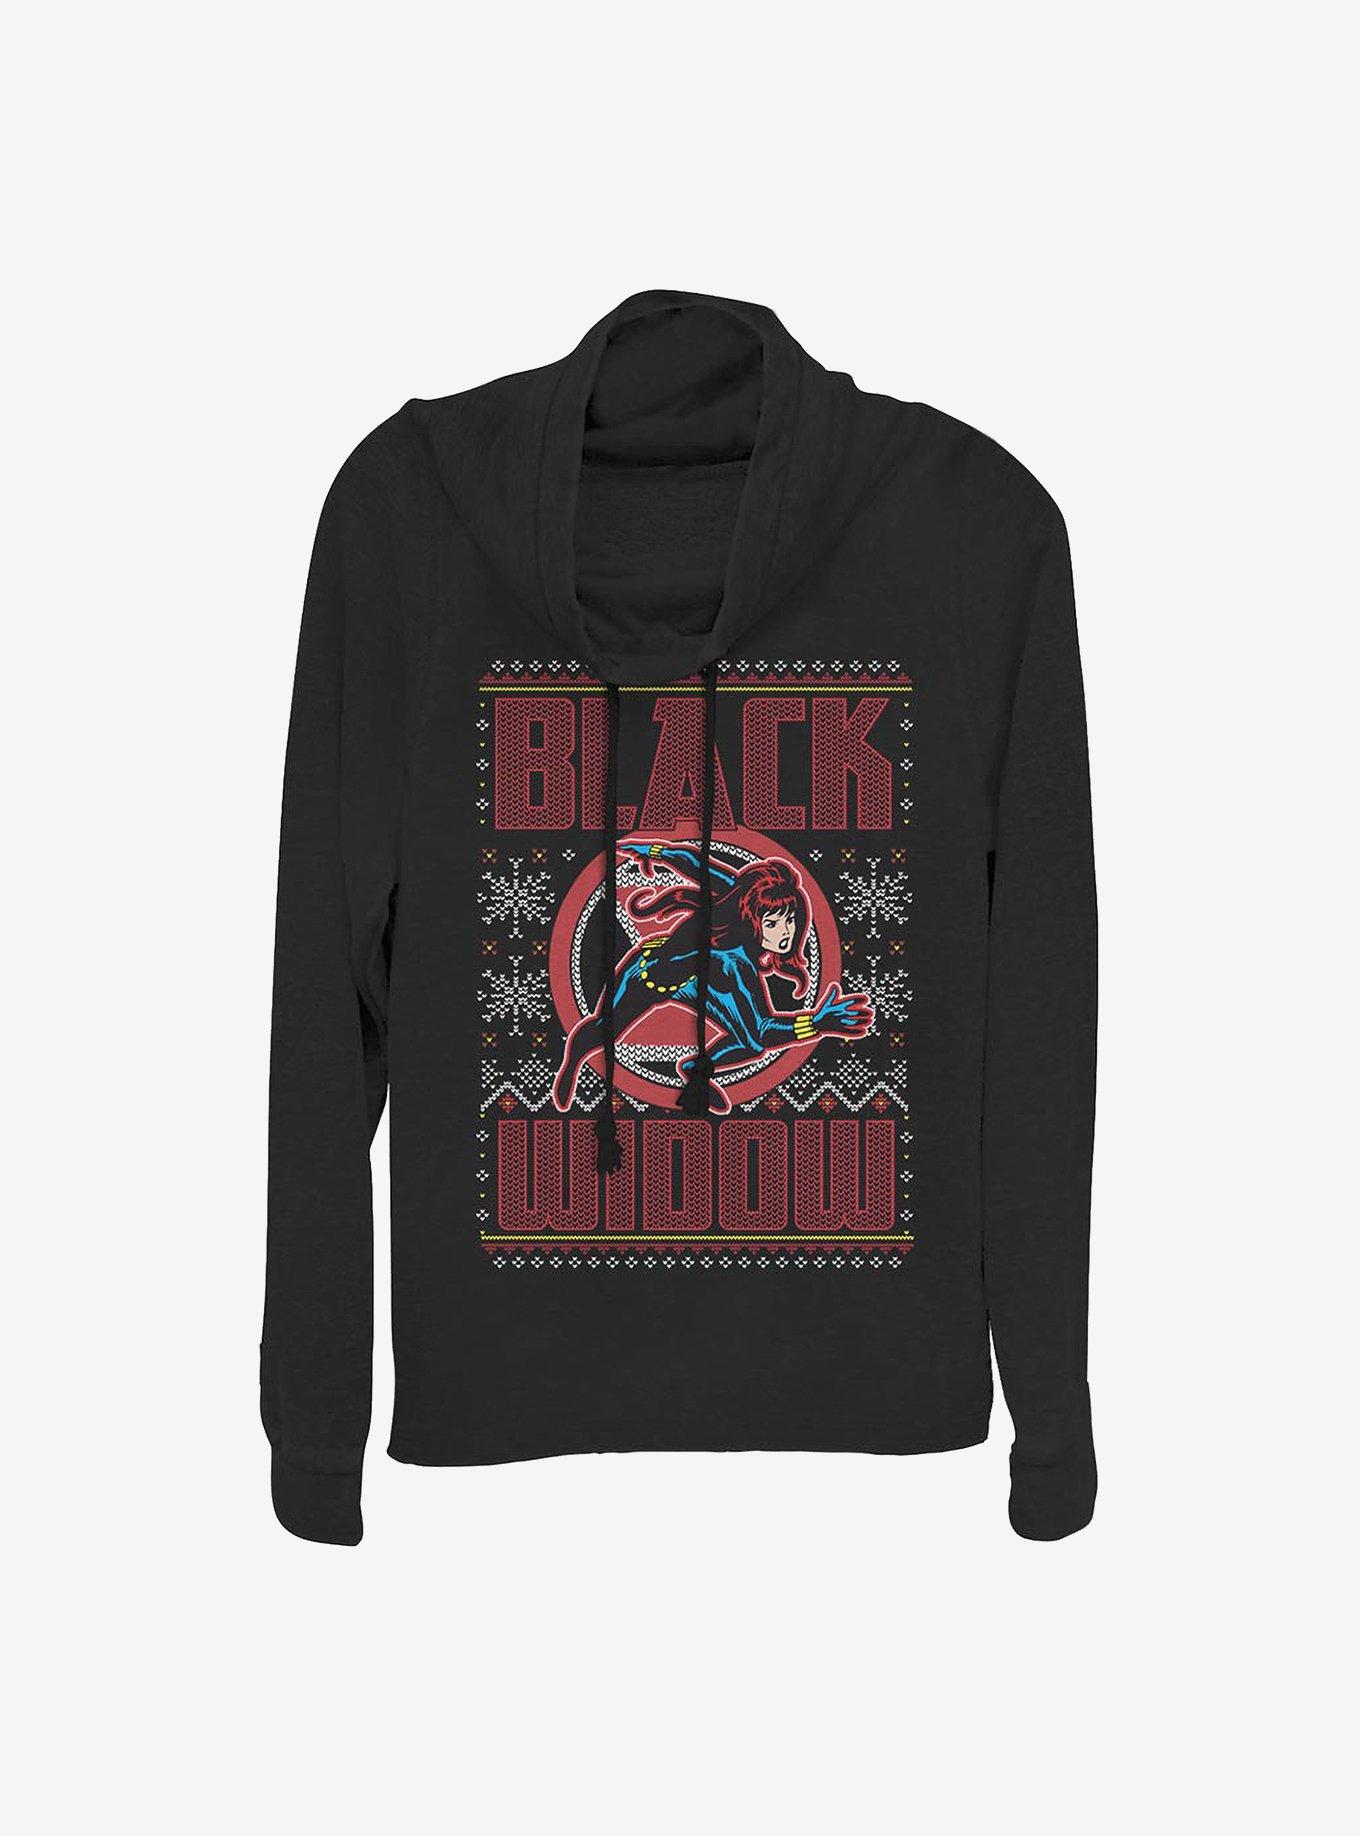 Marvel Black Widow Holiday Sweater Cowlneck Long-Sleeve Girls Top, BLACK, hi-res